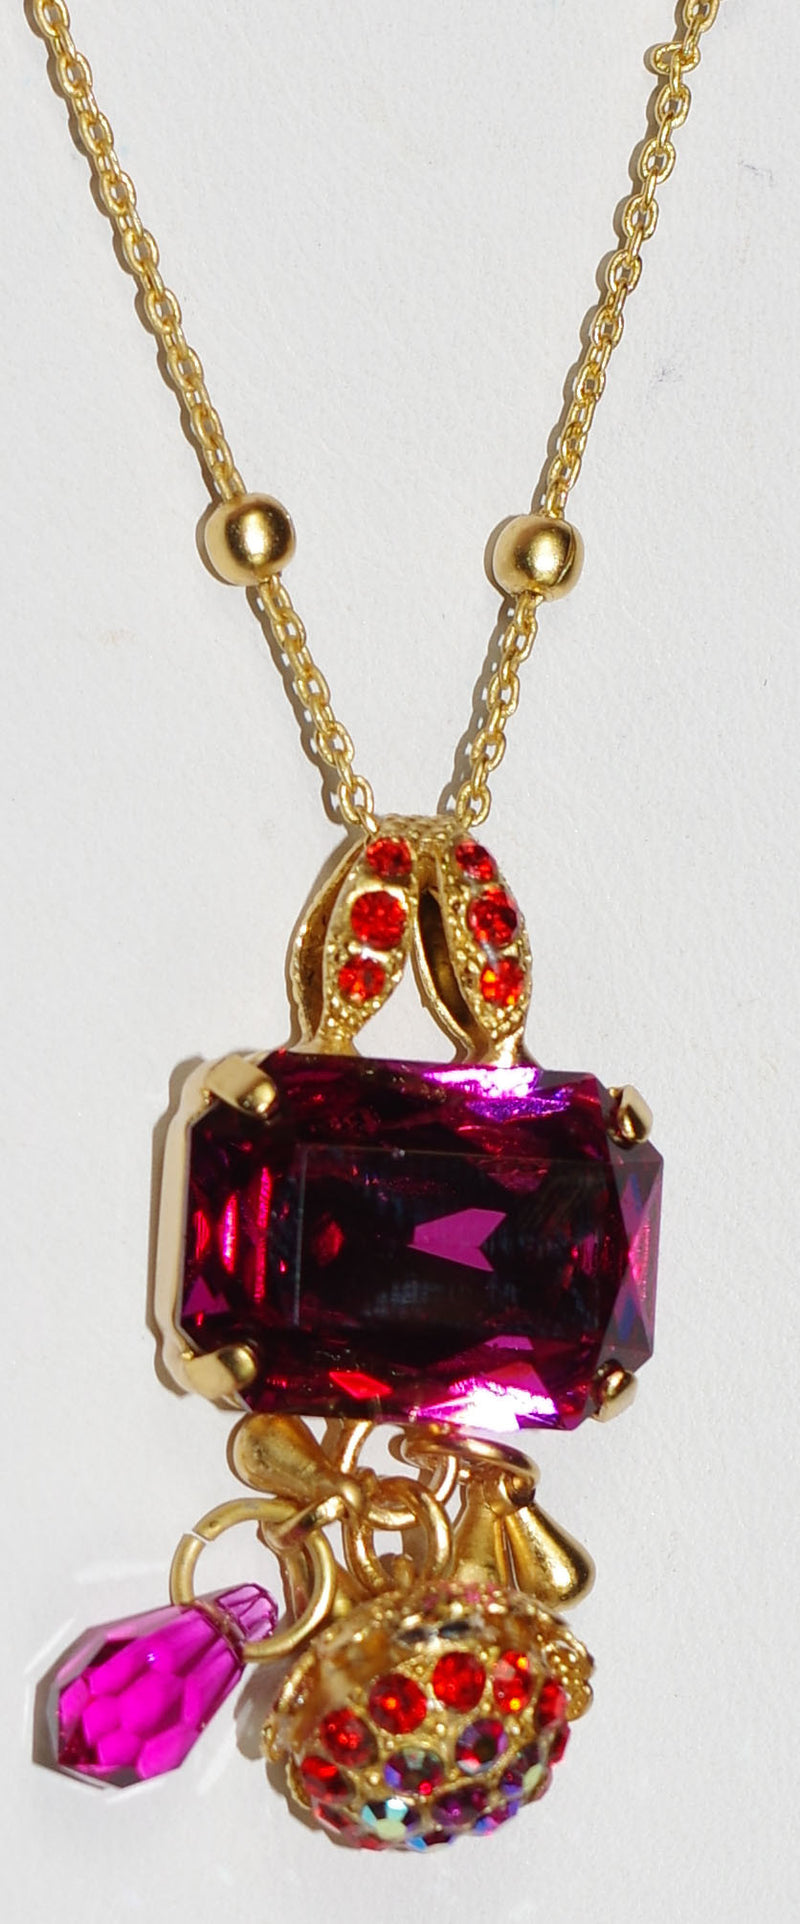 MARIANA PENDANT LADY MARMALADE: pink, orange stones in 1.5" yellow gold setting, 28" adjustable chain